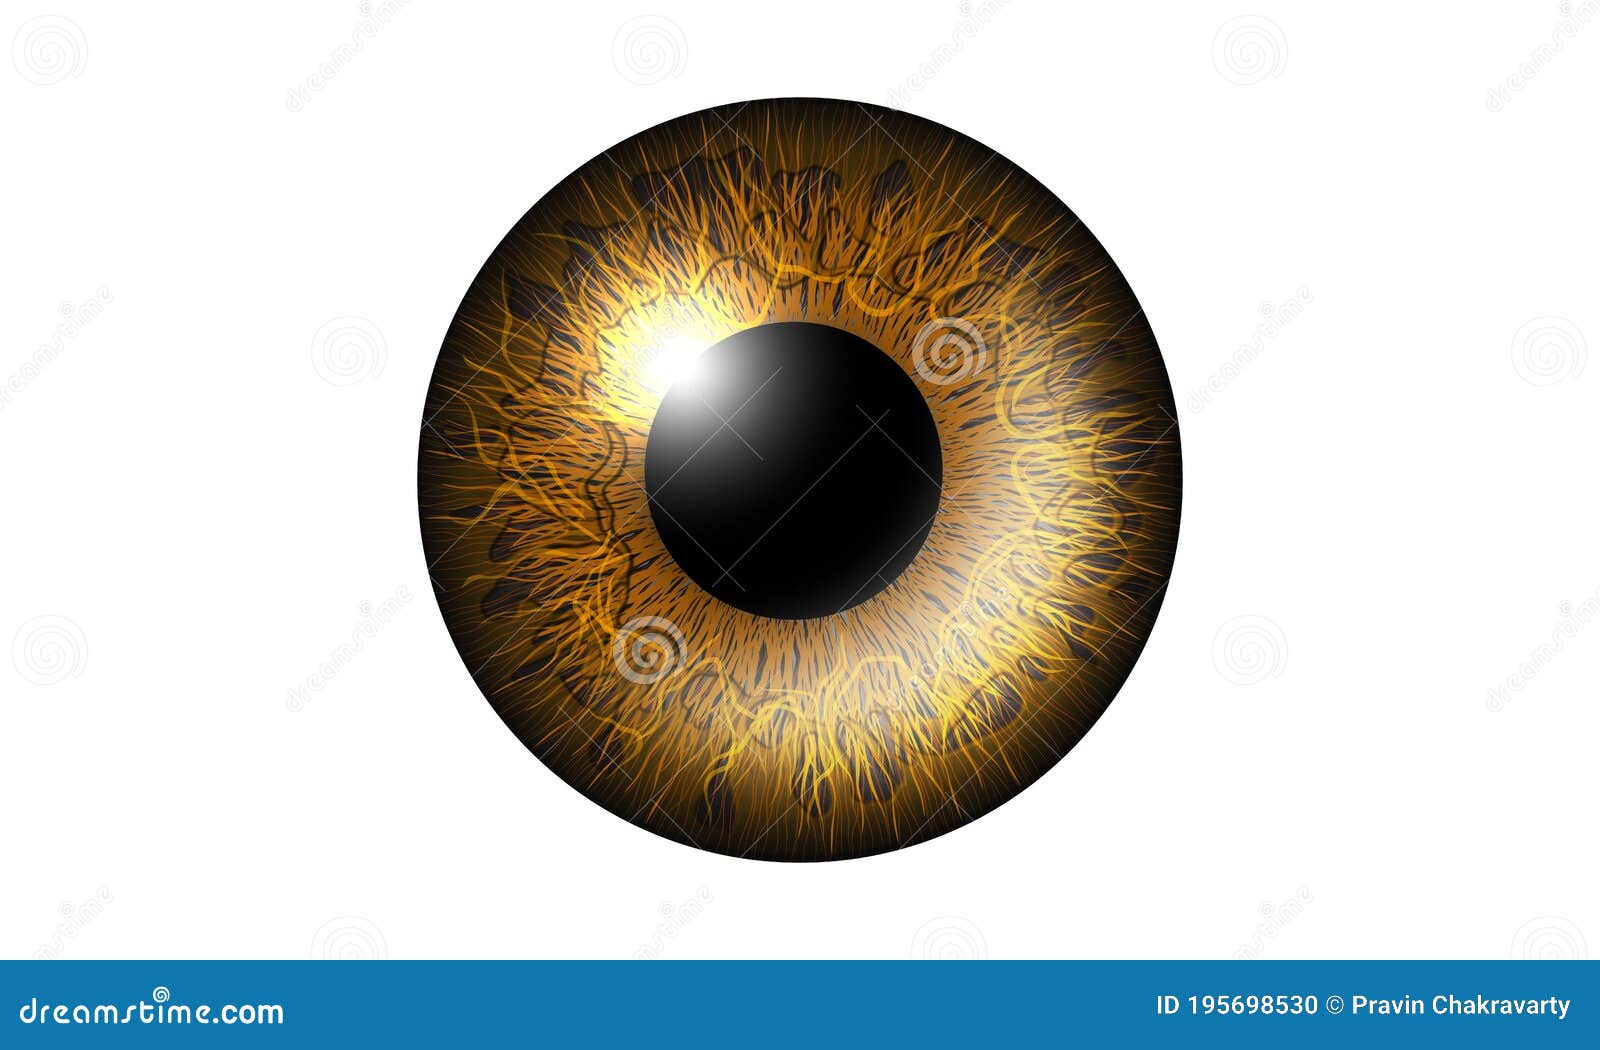 Golden eye Royalty Free Vector Image - VectorStock